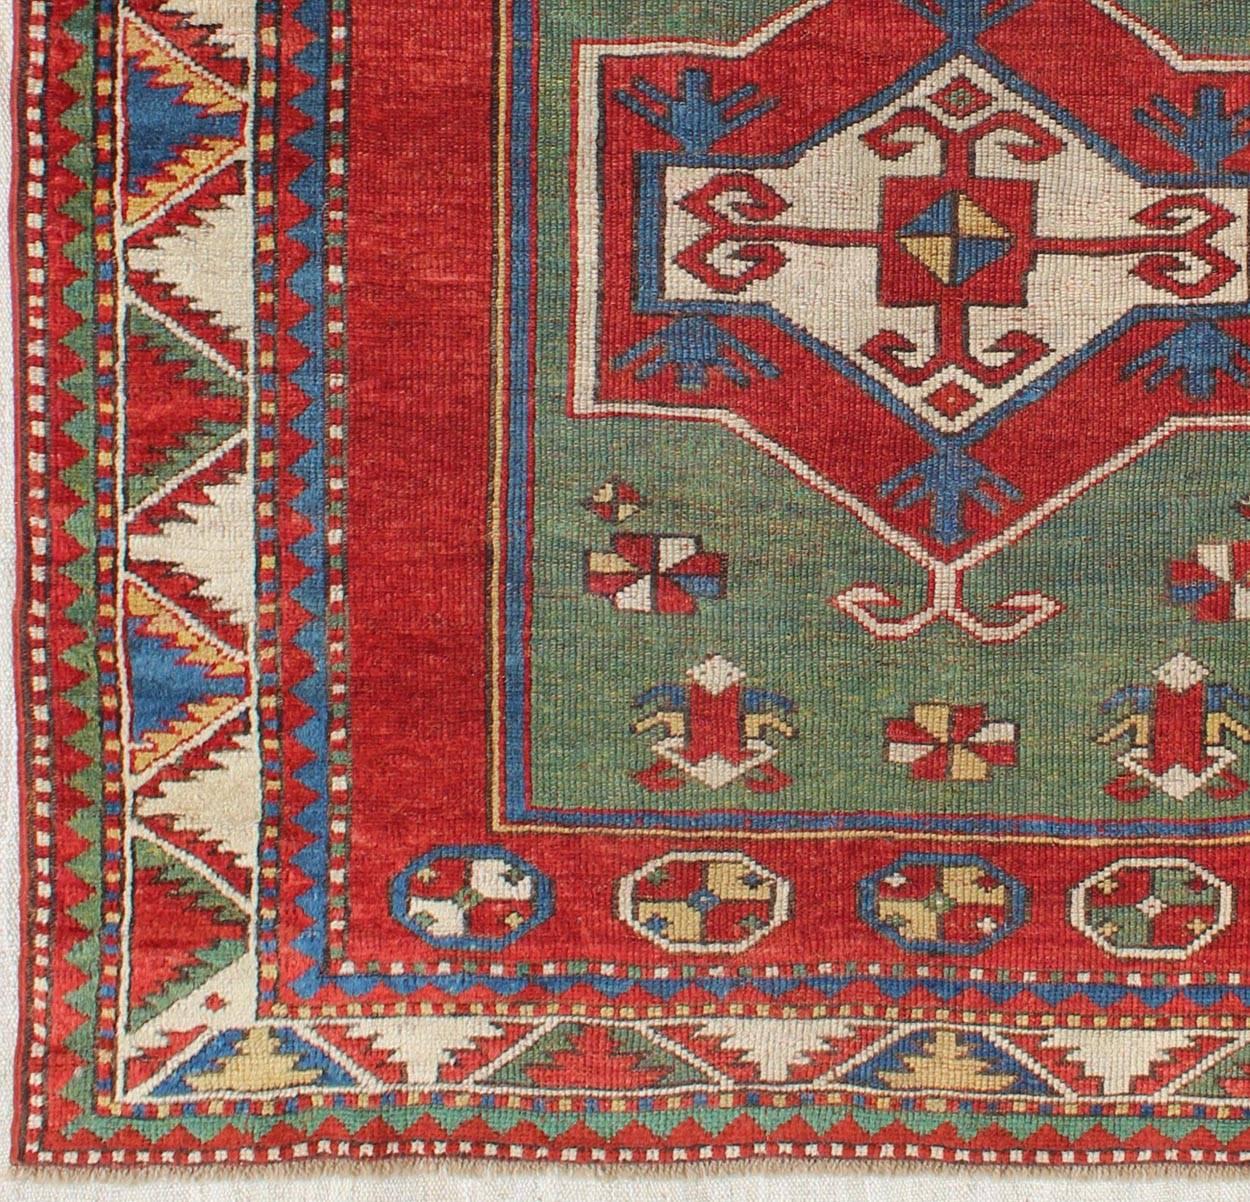 Green Fachralo Kazak, antique Caucasian Kazak rug with Tribal Design in red, blue, green, and ivory, rug 16-0605, country of origin / type: Iran / Caucasian Kazak, circa 1880.

Kazak rugs are among the most desirable Caucasian rugs. The vibrant